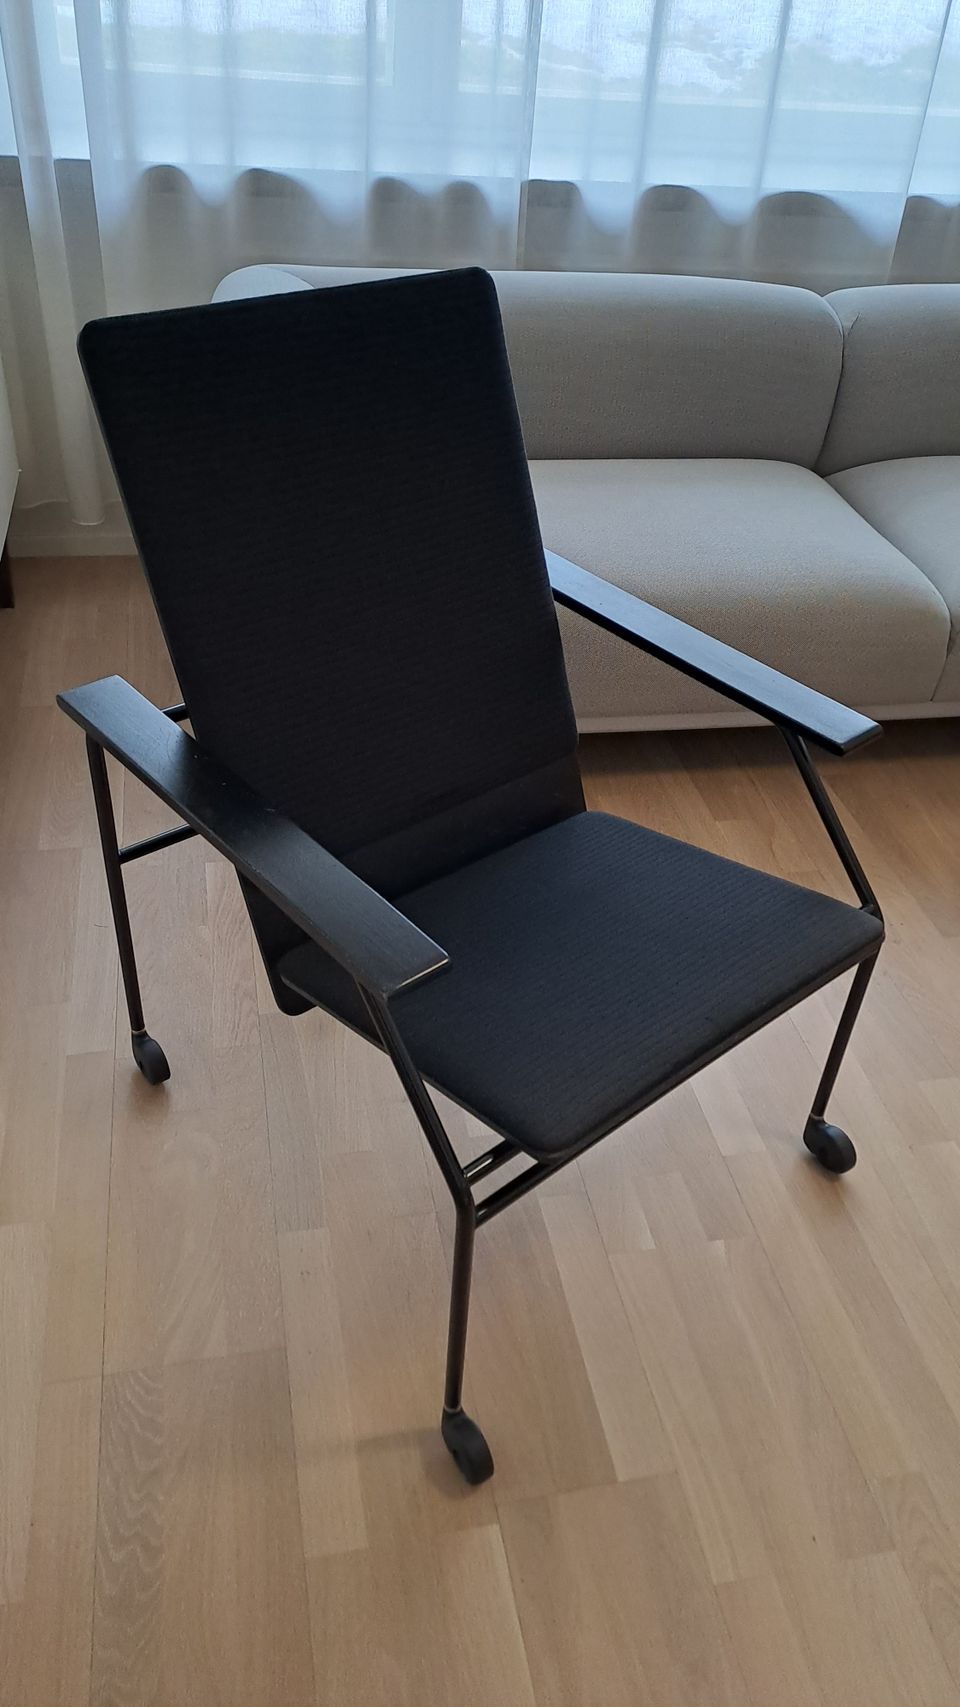 Visio tuoli prototyyppi